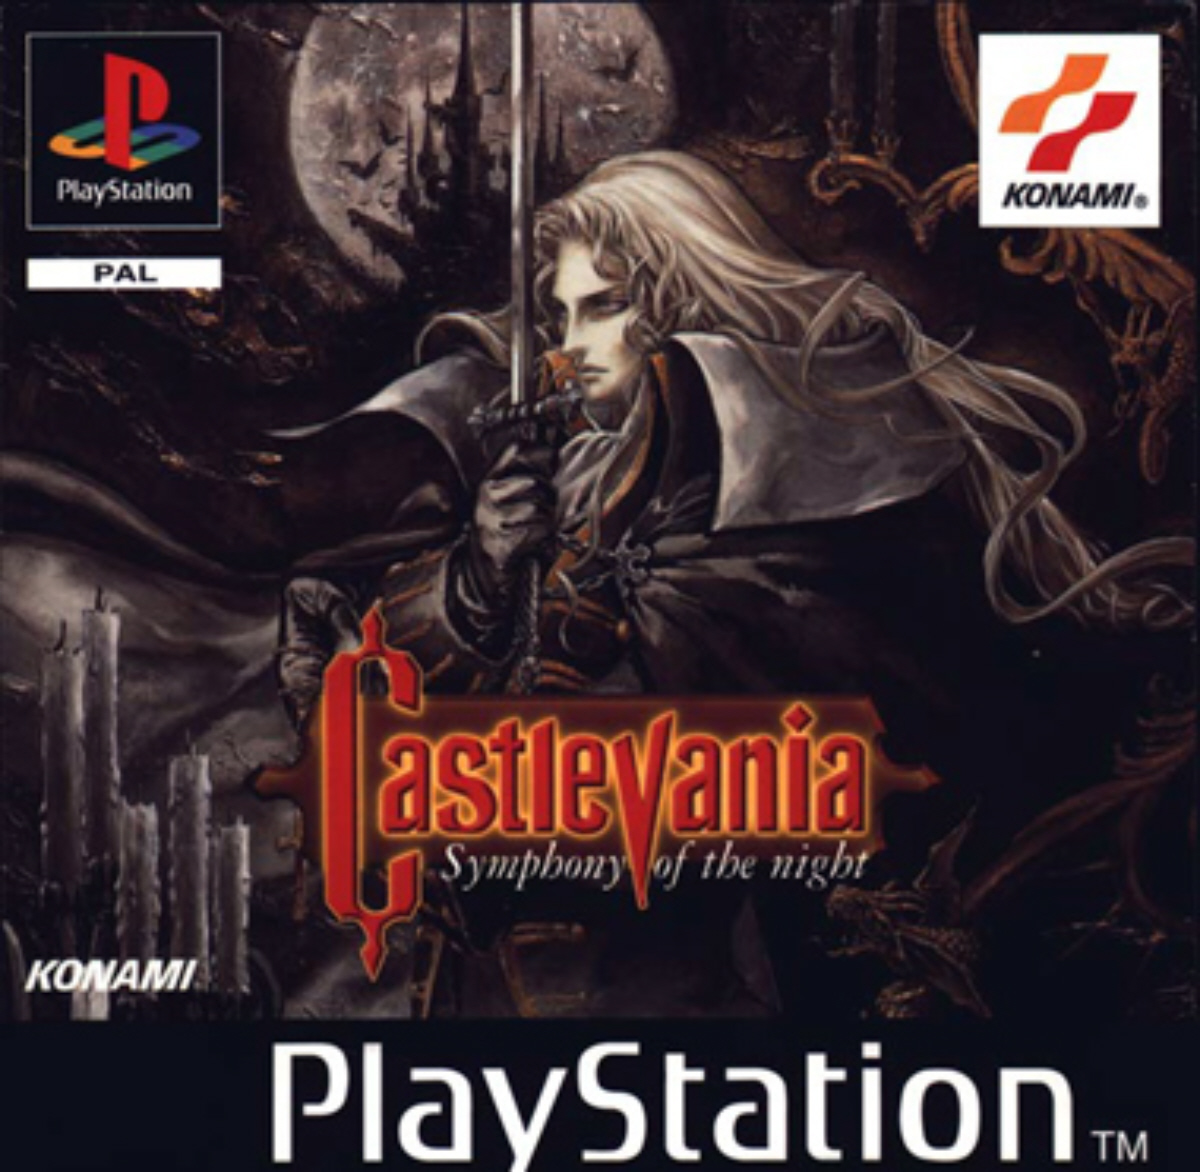 castlevania-symphony-of-the-night-pal-cover-artwork.jpg